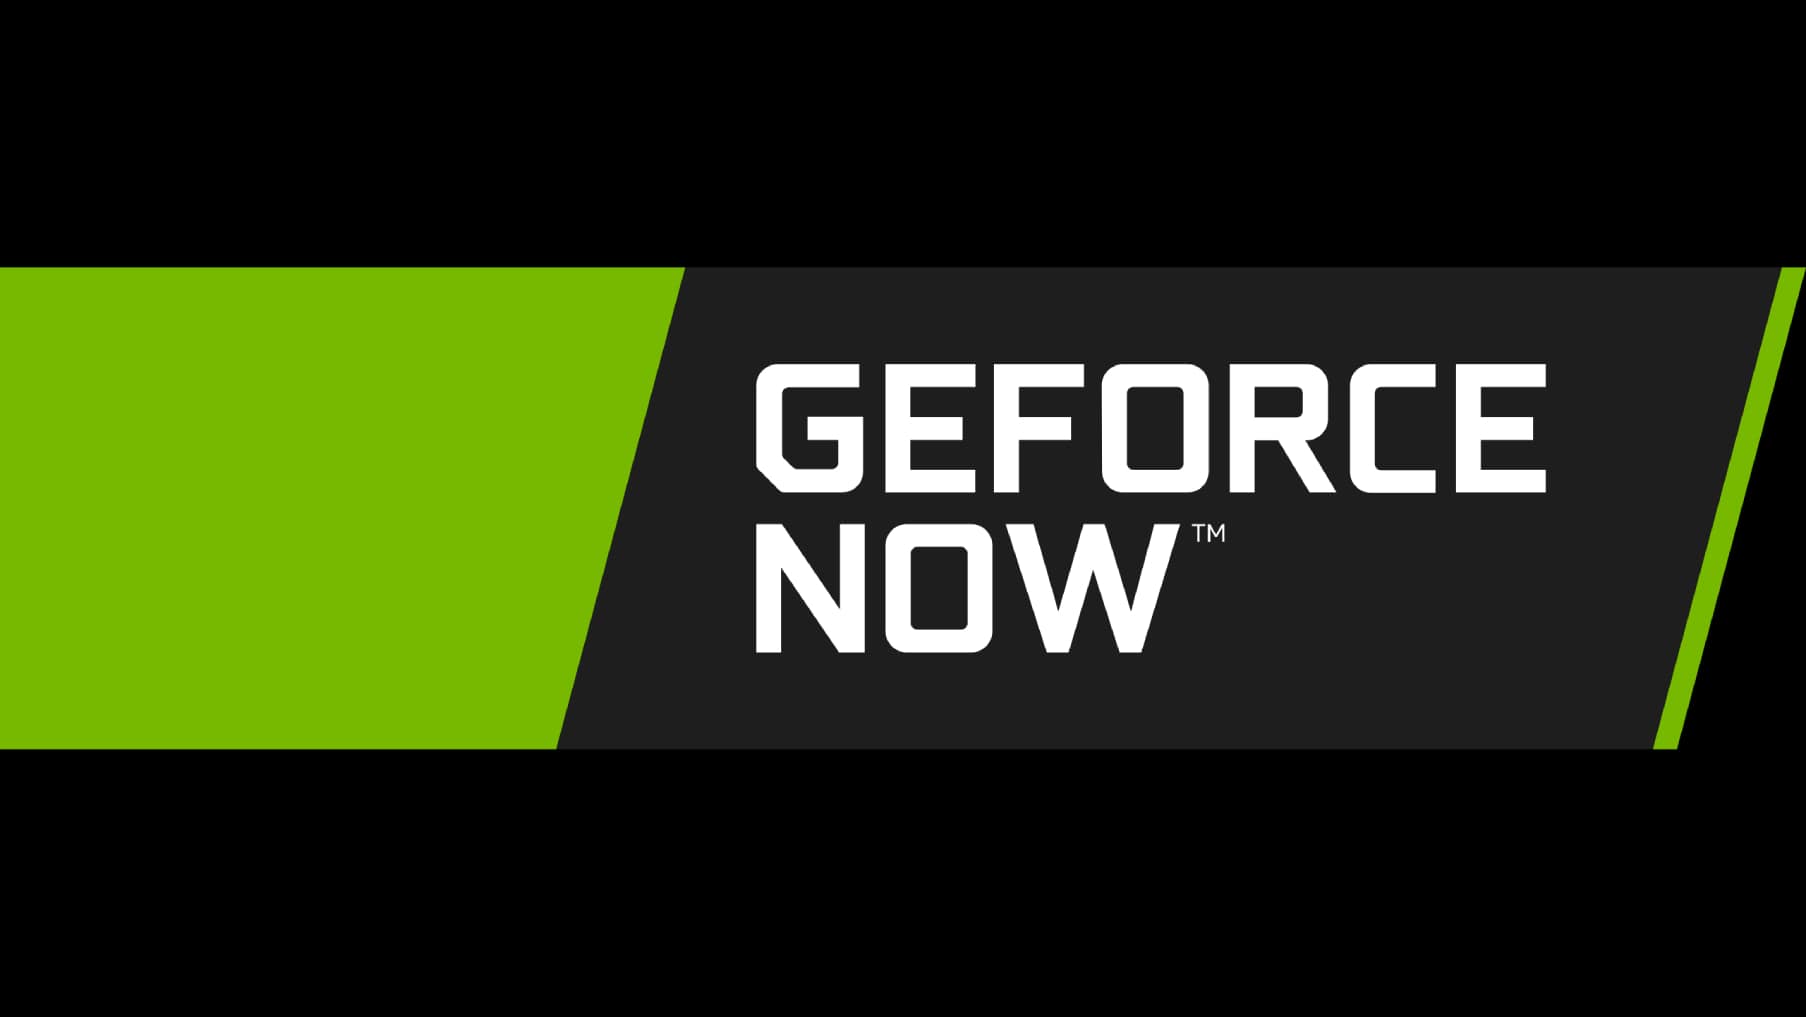 Usuarios gratuitos de GeForce Now, prepárense para ver anuncios